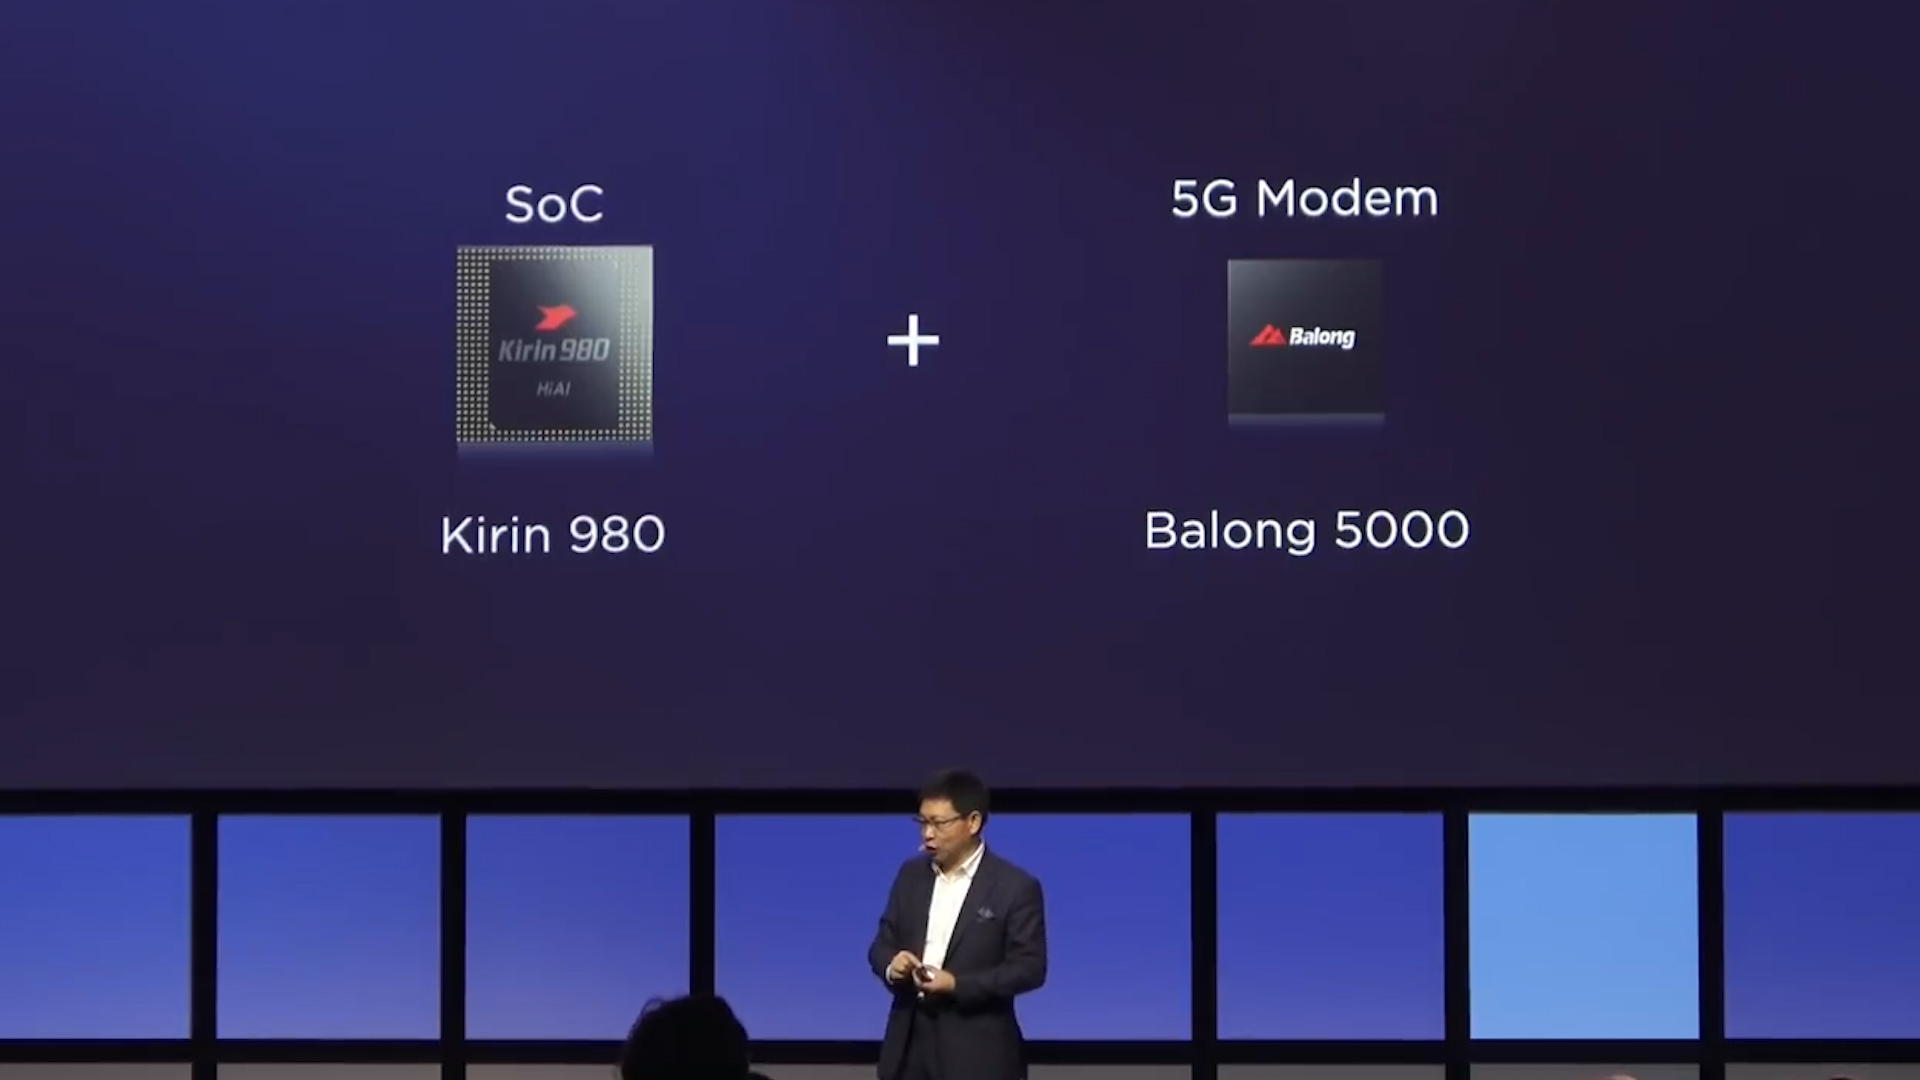 Huawei Kirin 980 analizi: Yeni nesil mobil işlemci